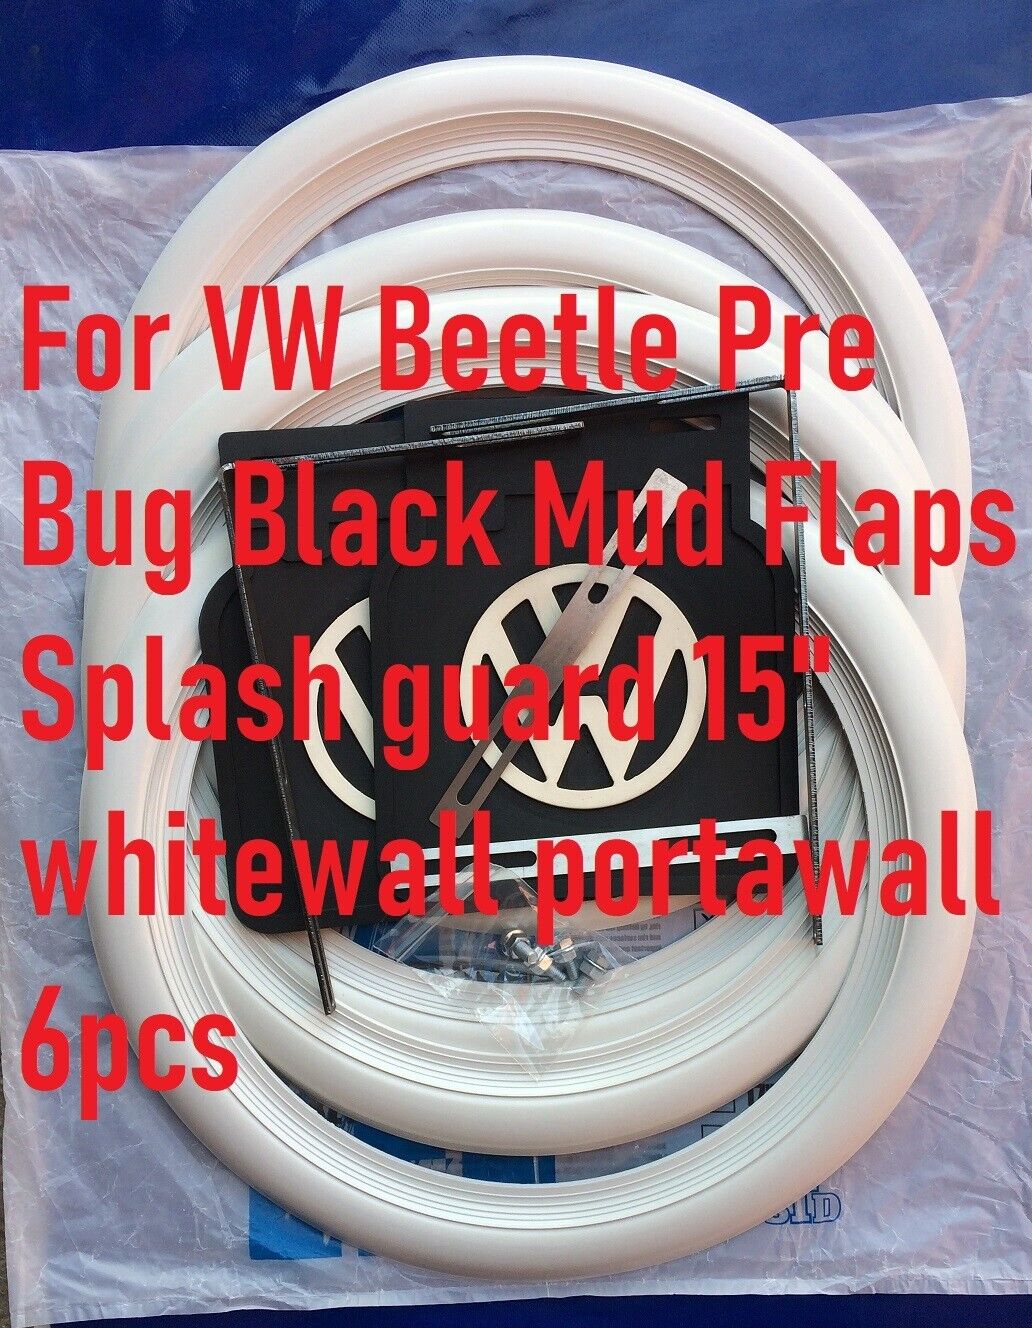 For VW Beetle Pre Bug Black Mud Flaps Splash guard 15\